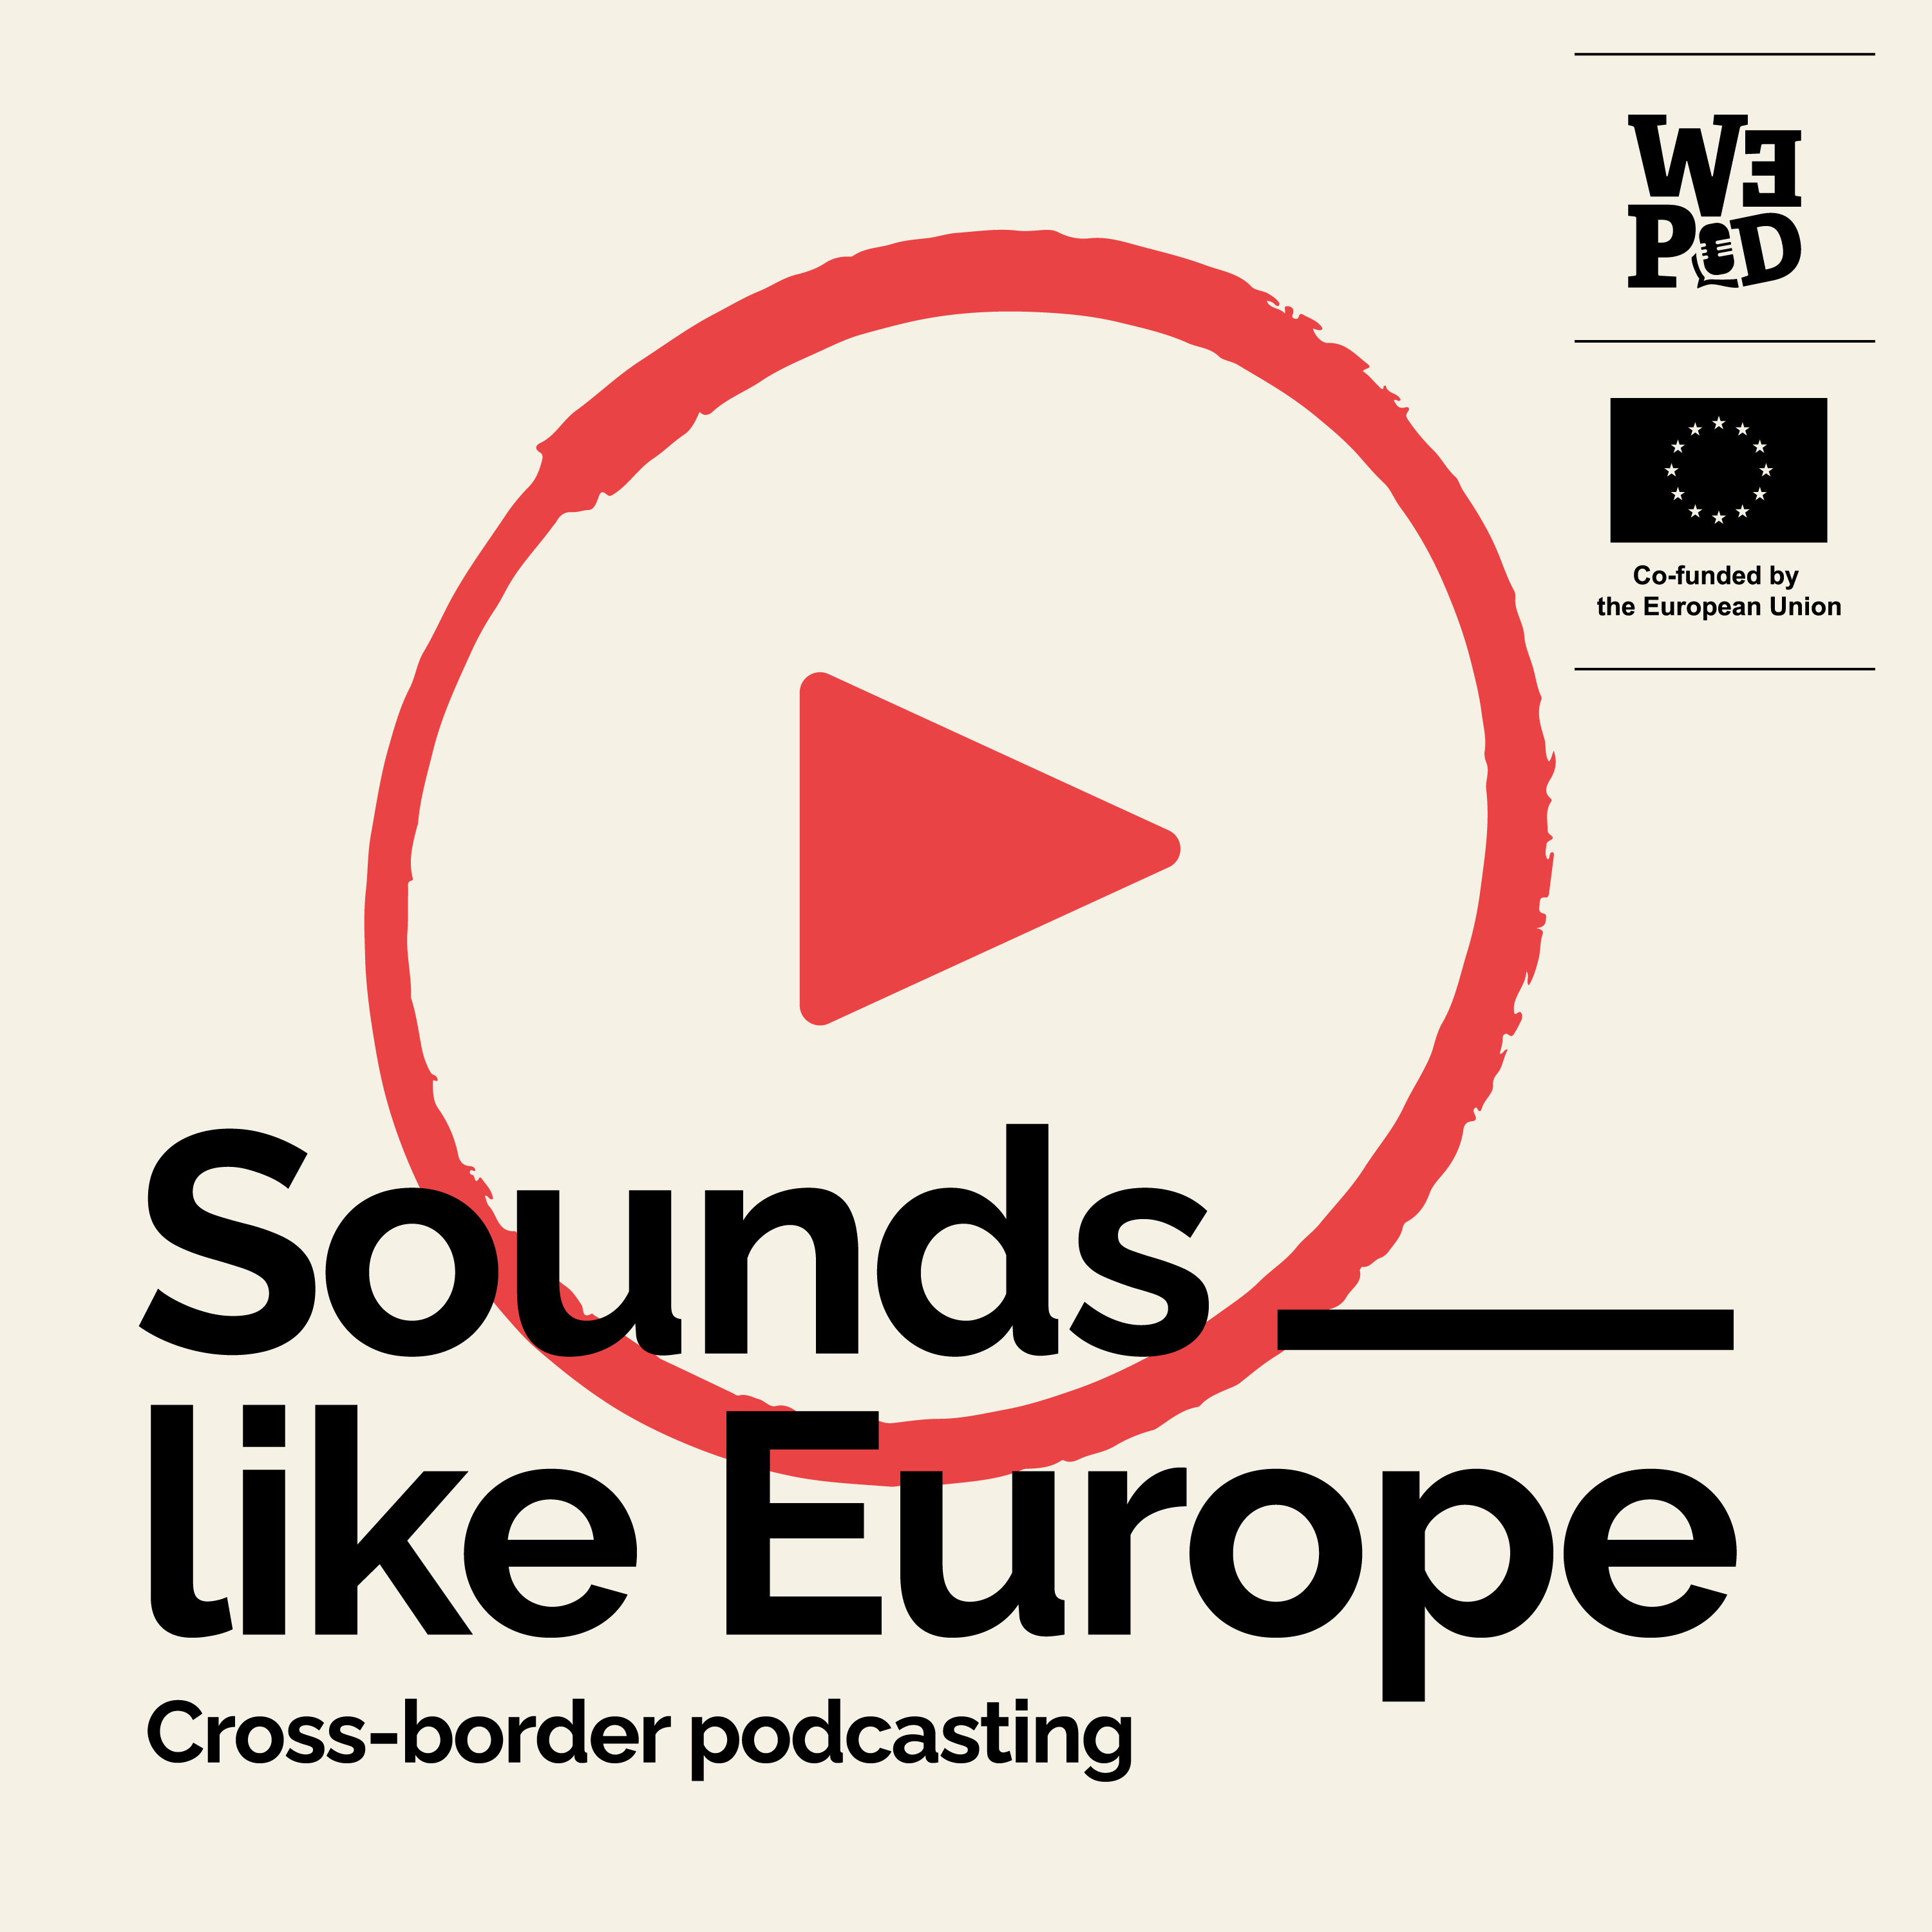 Imagen de Sounds like Europe, cross-border podcasting - coming soon